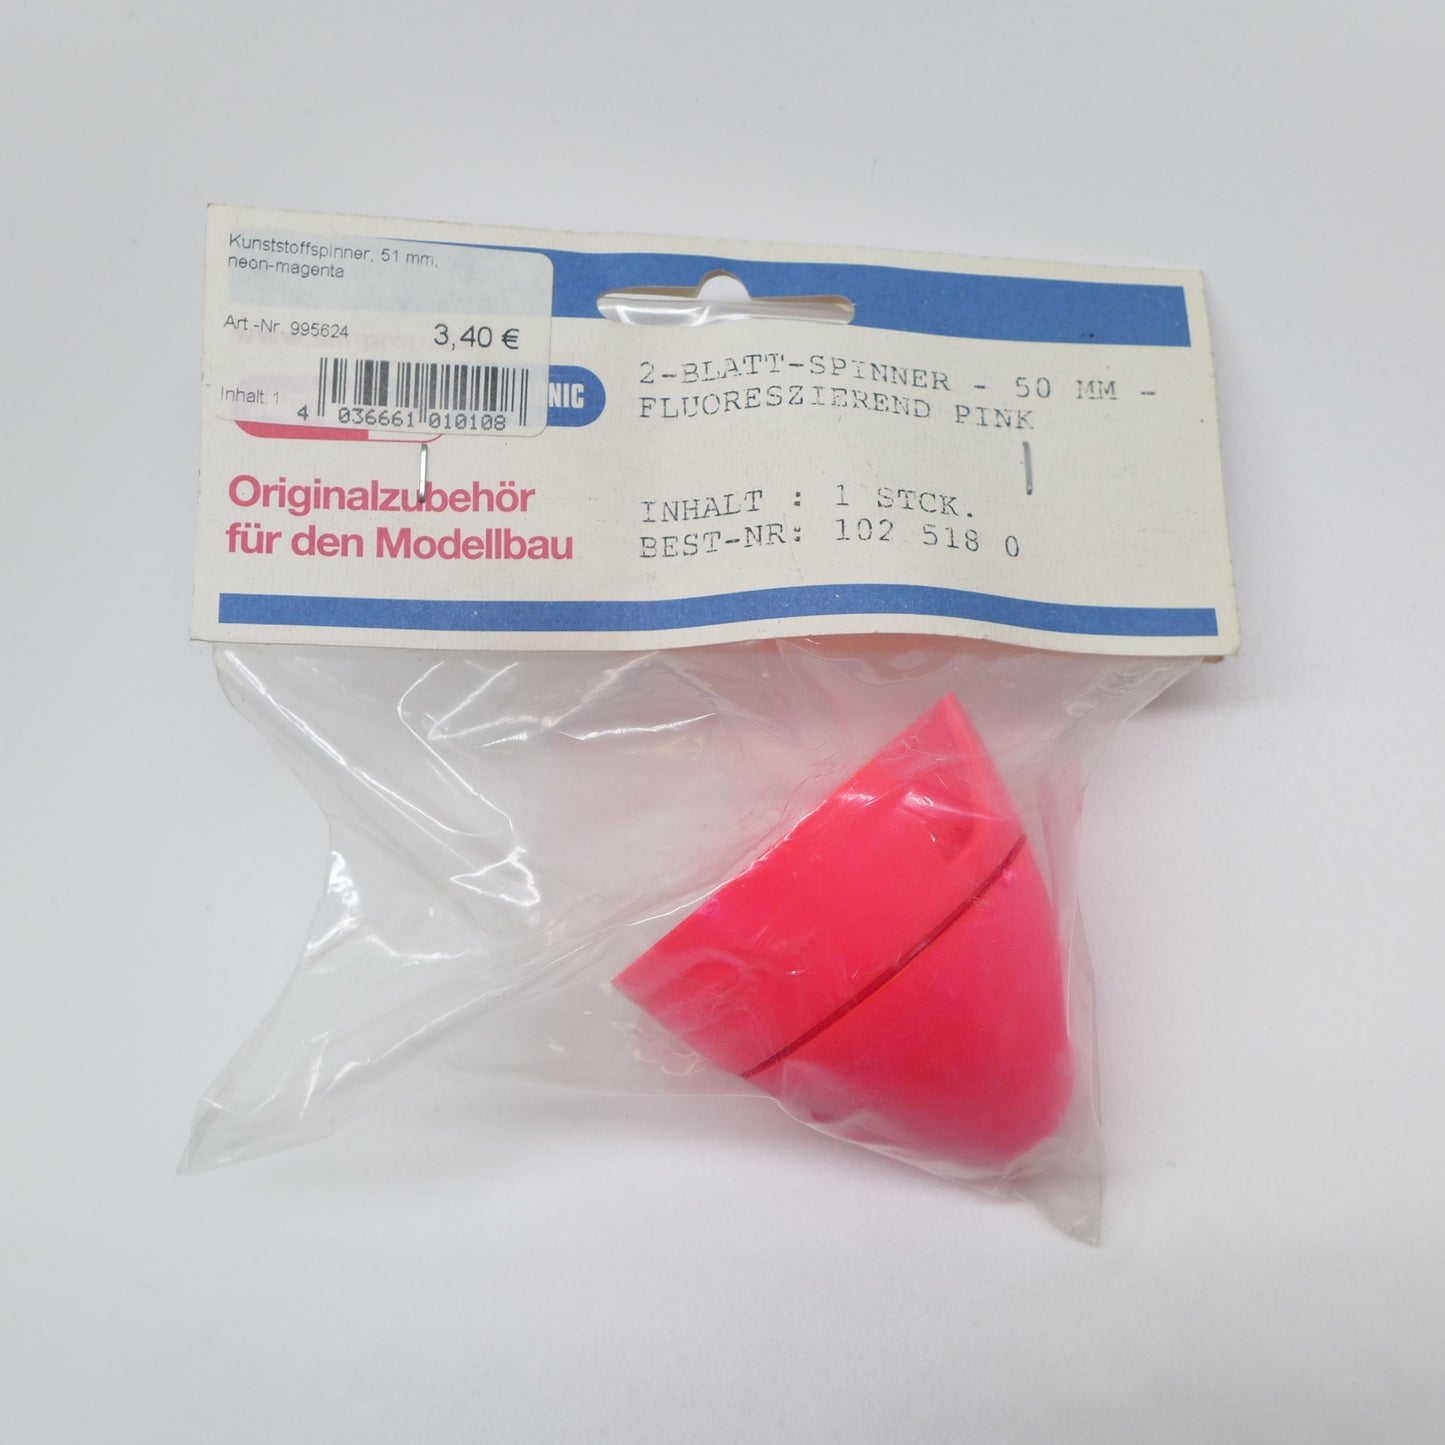 SIMPROP Kunststoff Spinner 51mm 2-Blatt (neon-magenta)